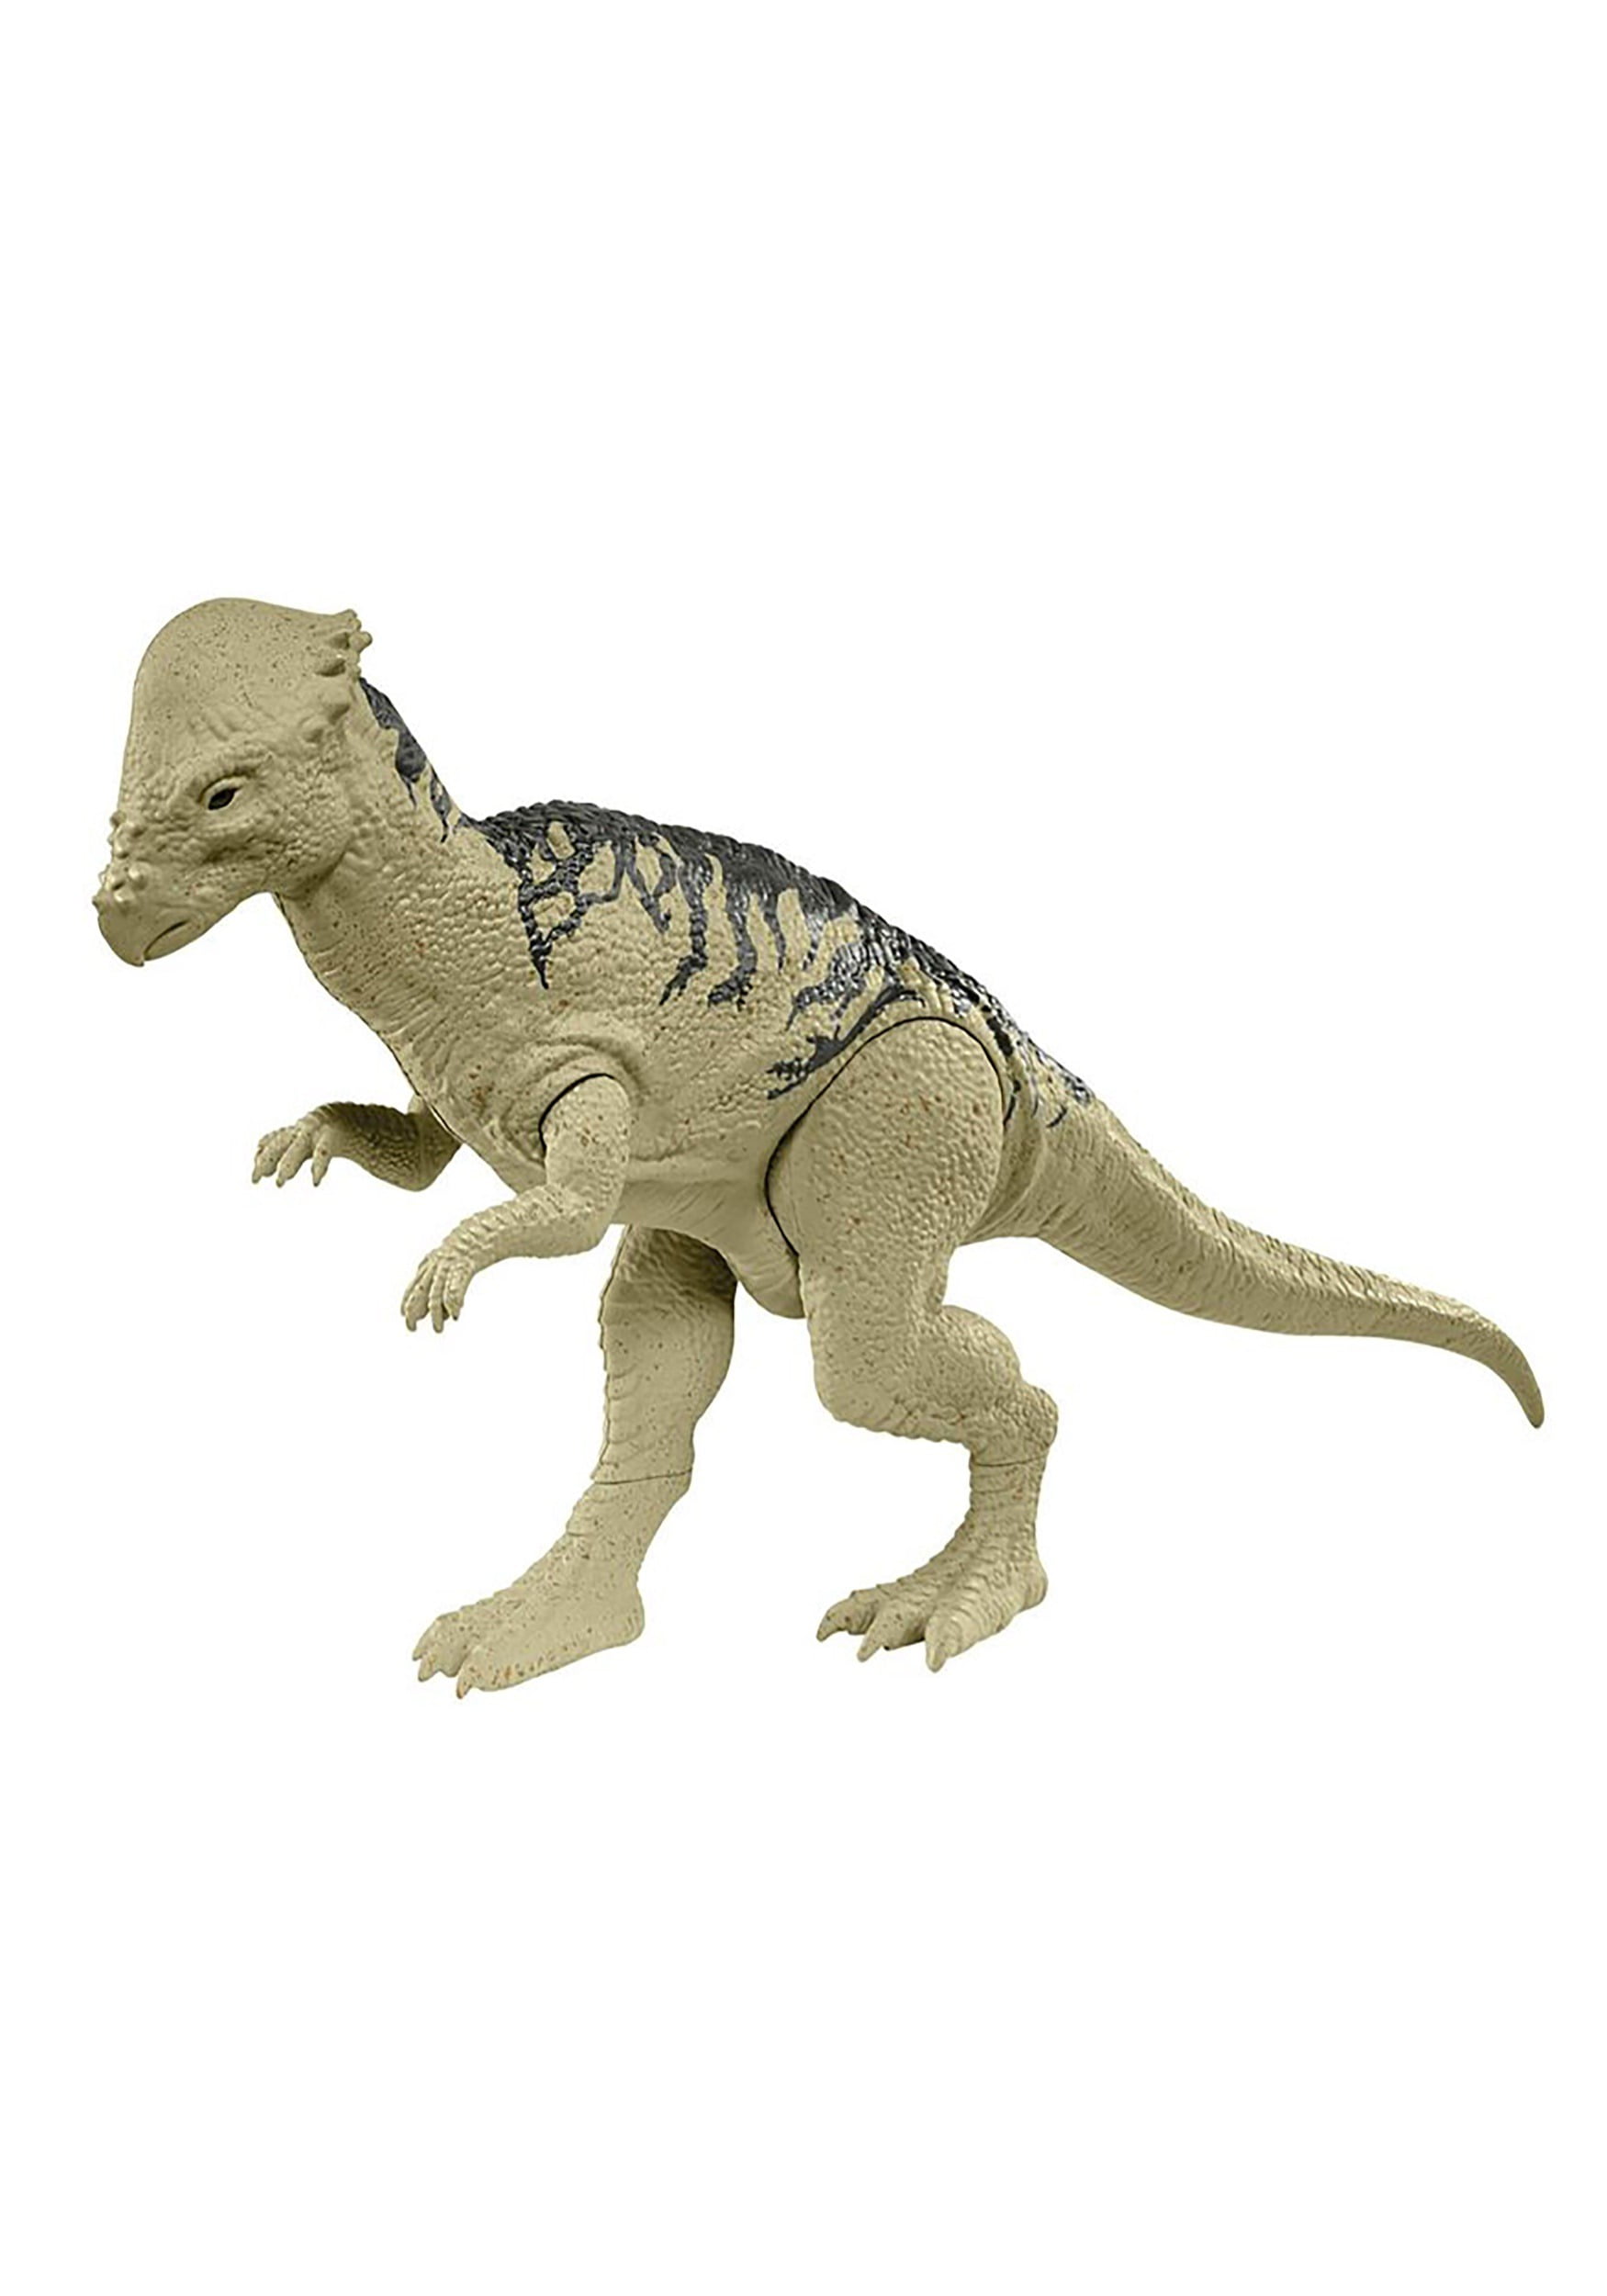 Jurassic World Fallen Kingdom Legacy Collection Pachycephalosaurus Action Figure for sale online 